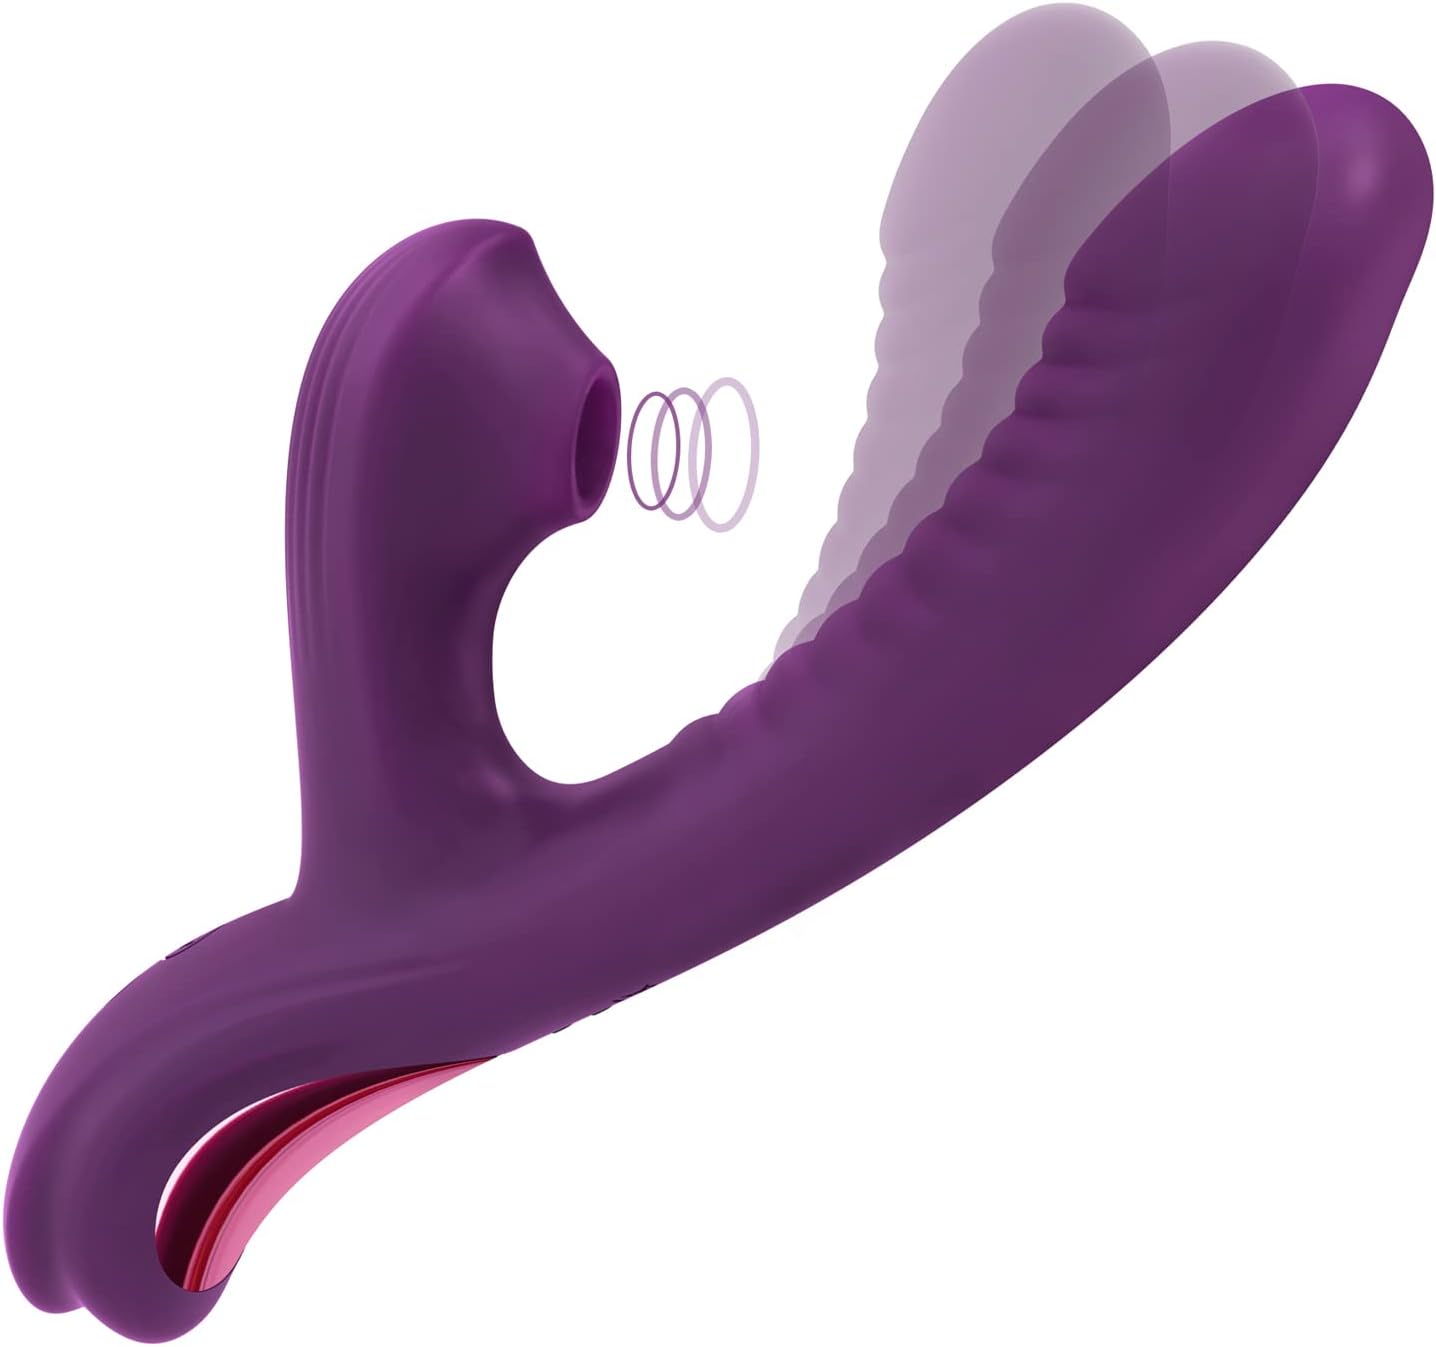 Rechargeable Vibrator - 20 Patterns & 8 Speeds - G-Spot Vibrator Clit, Sex  Toys, Vibrator for Women Pleasure, Quiet & Small Vibrator, Dildo, Personal